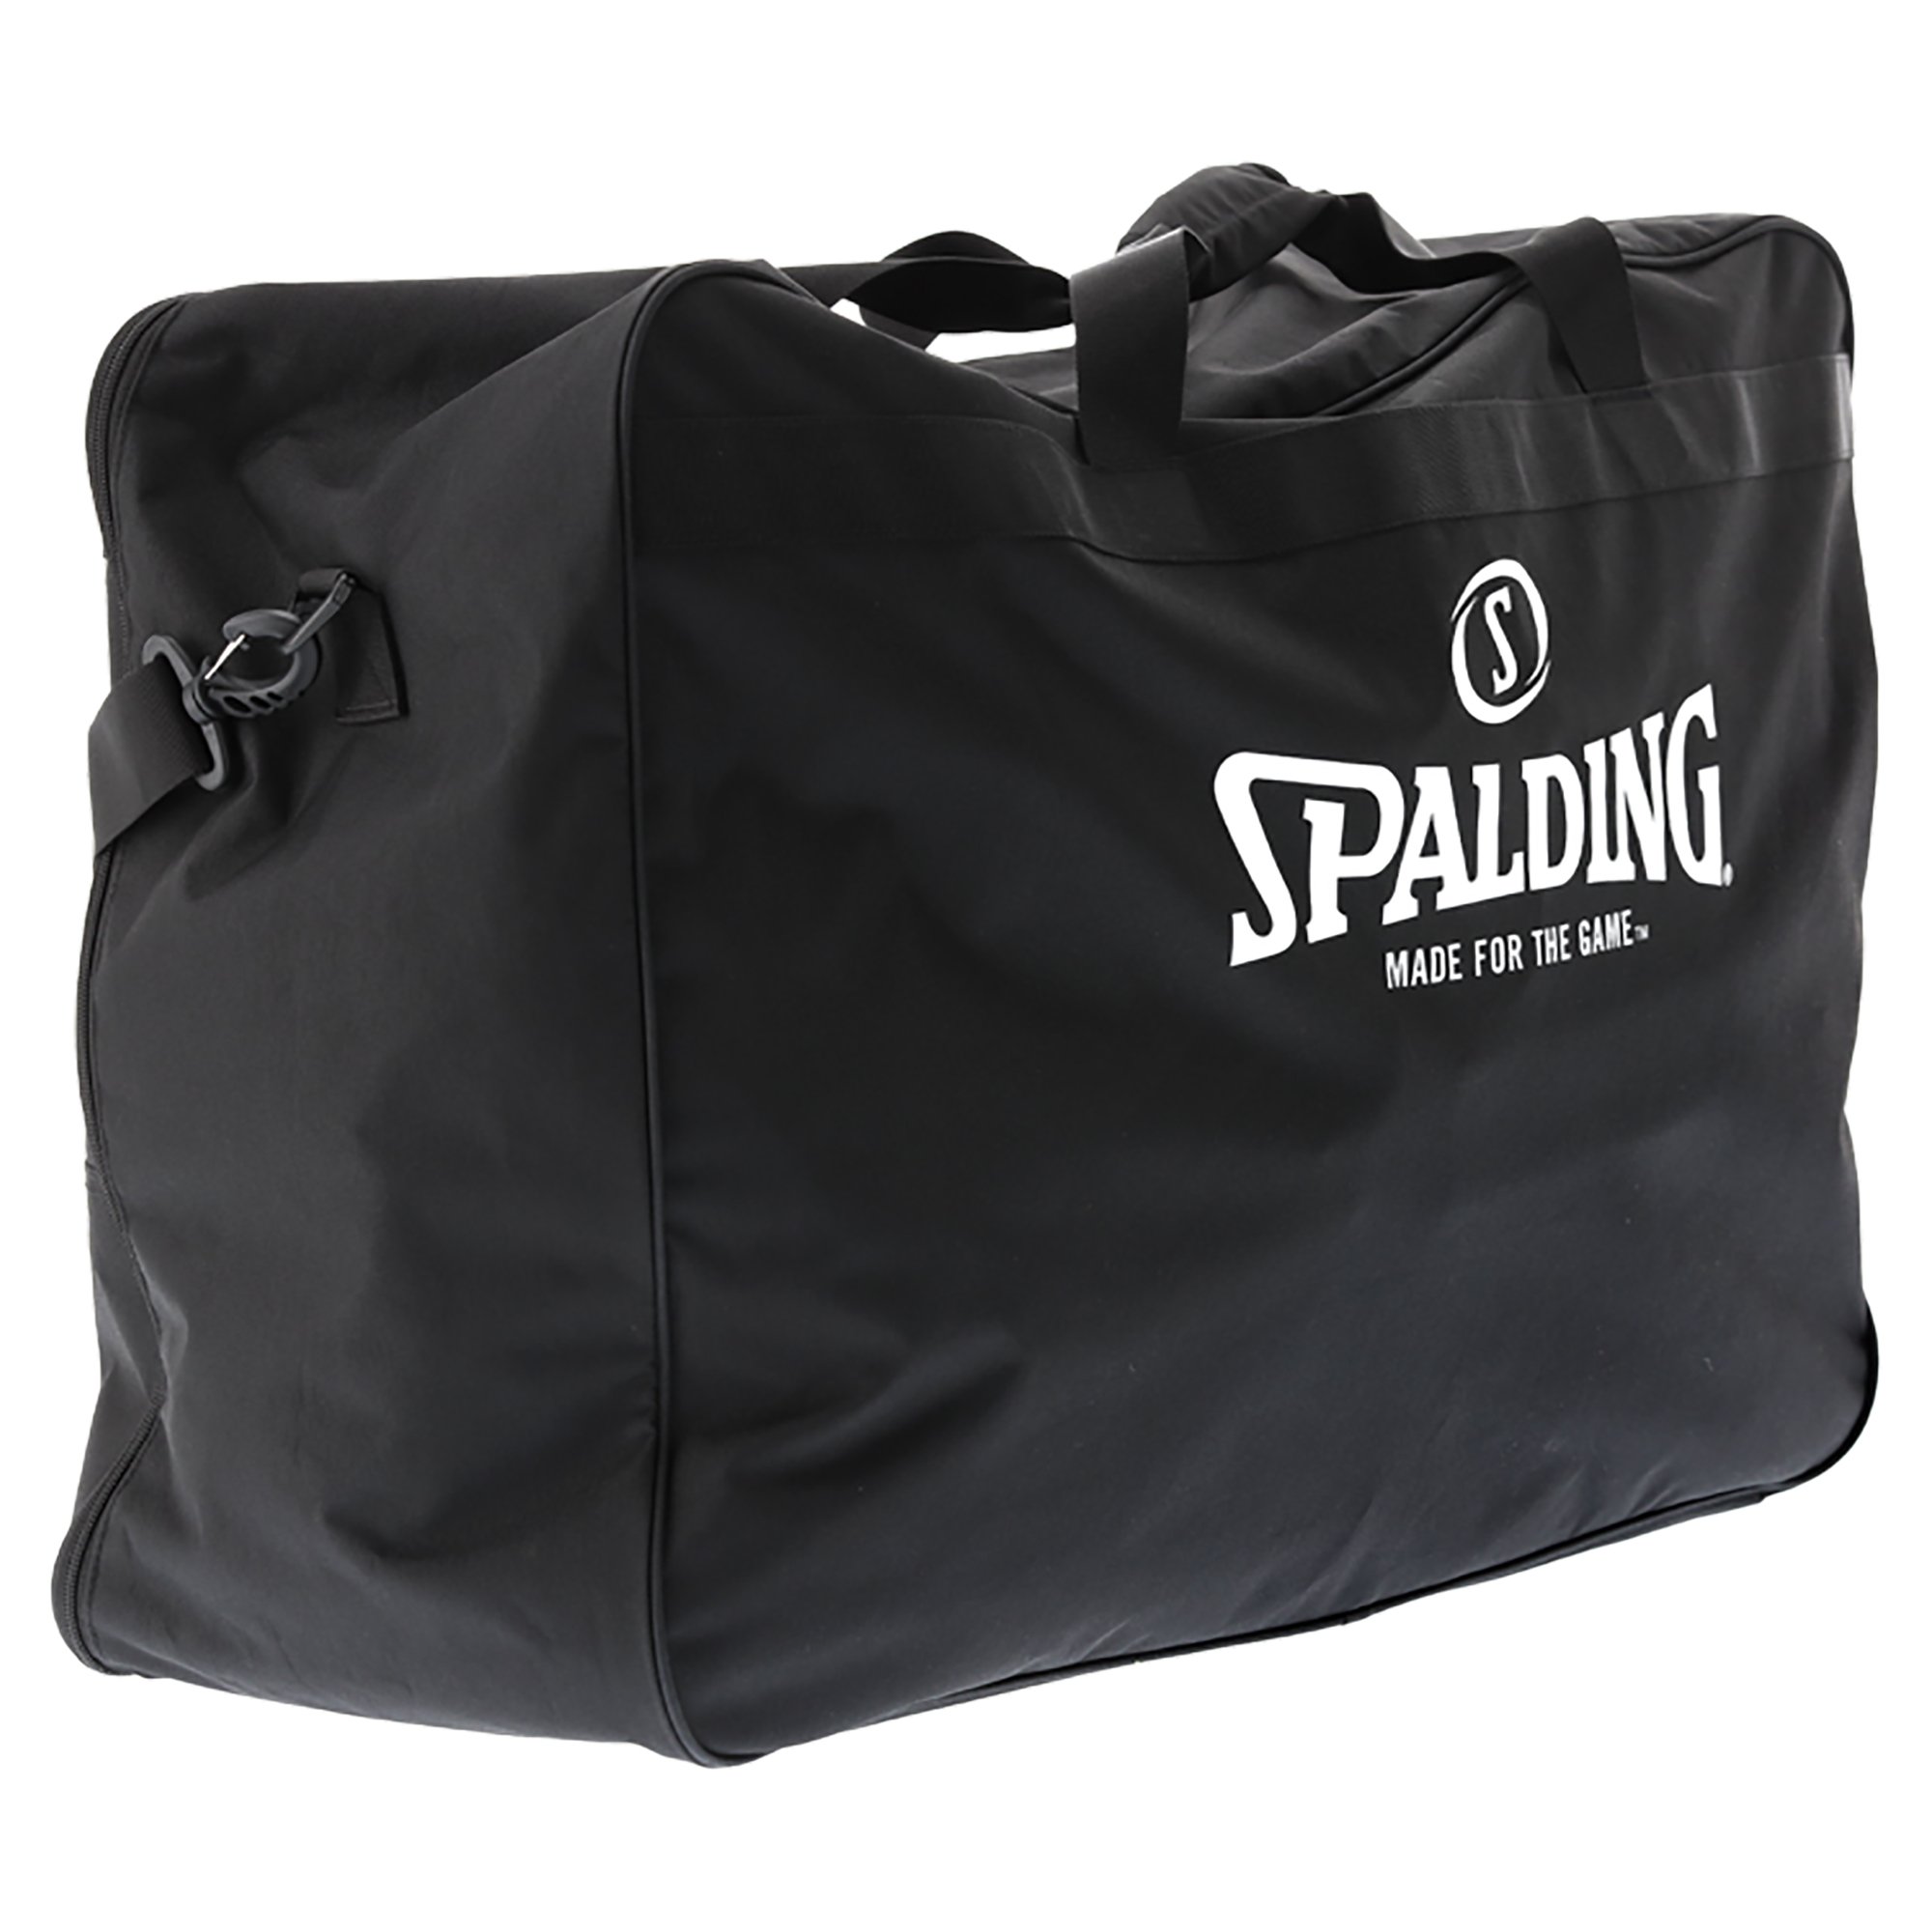 Spalding Ball Bag